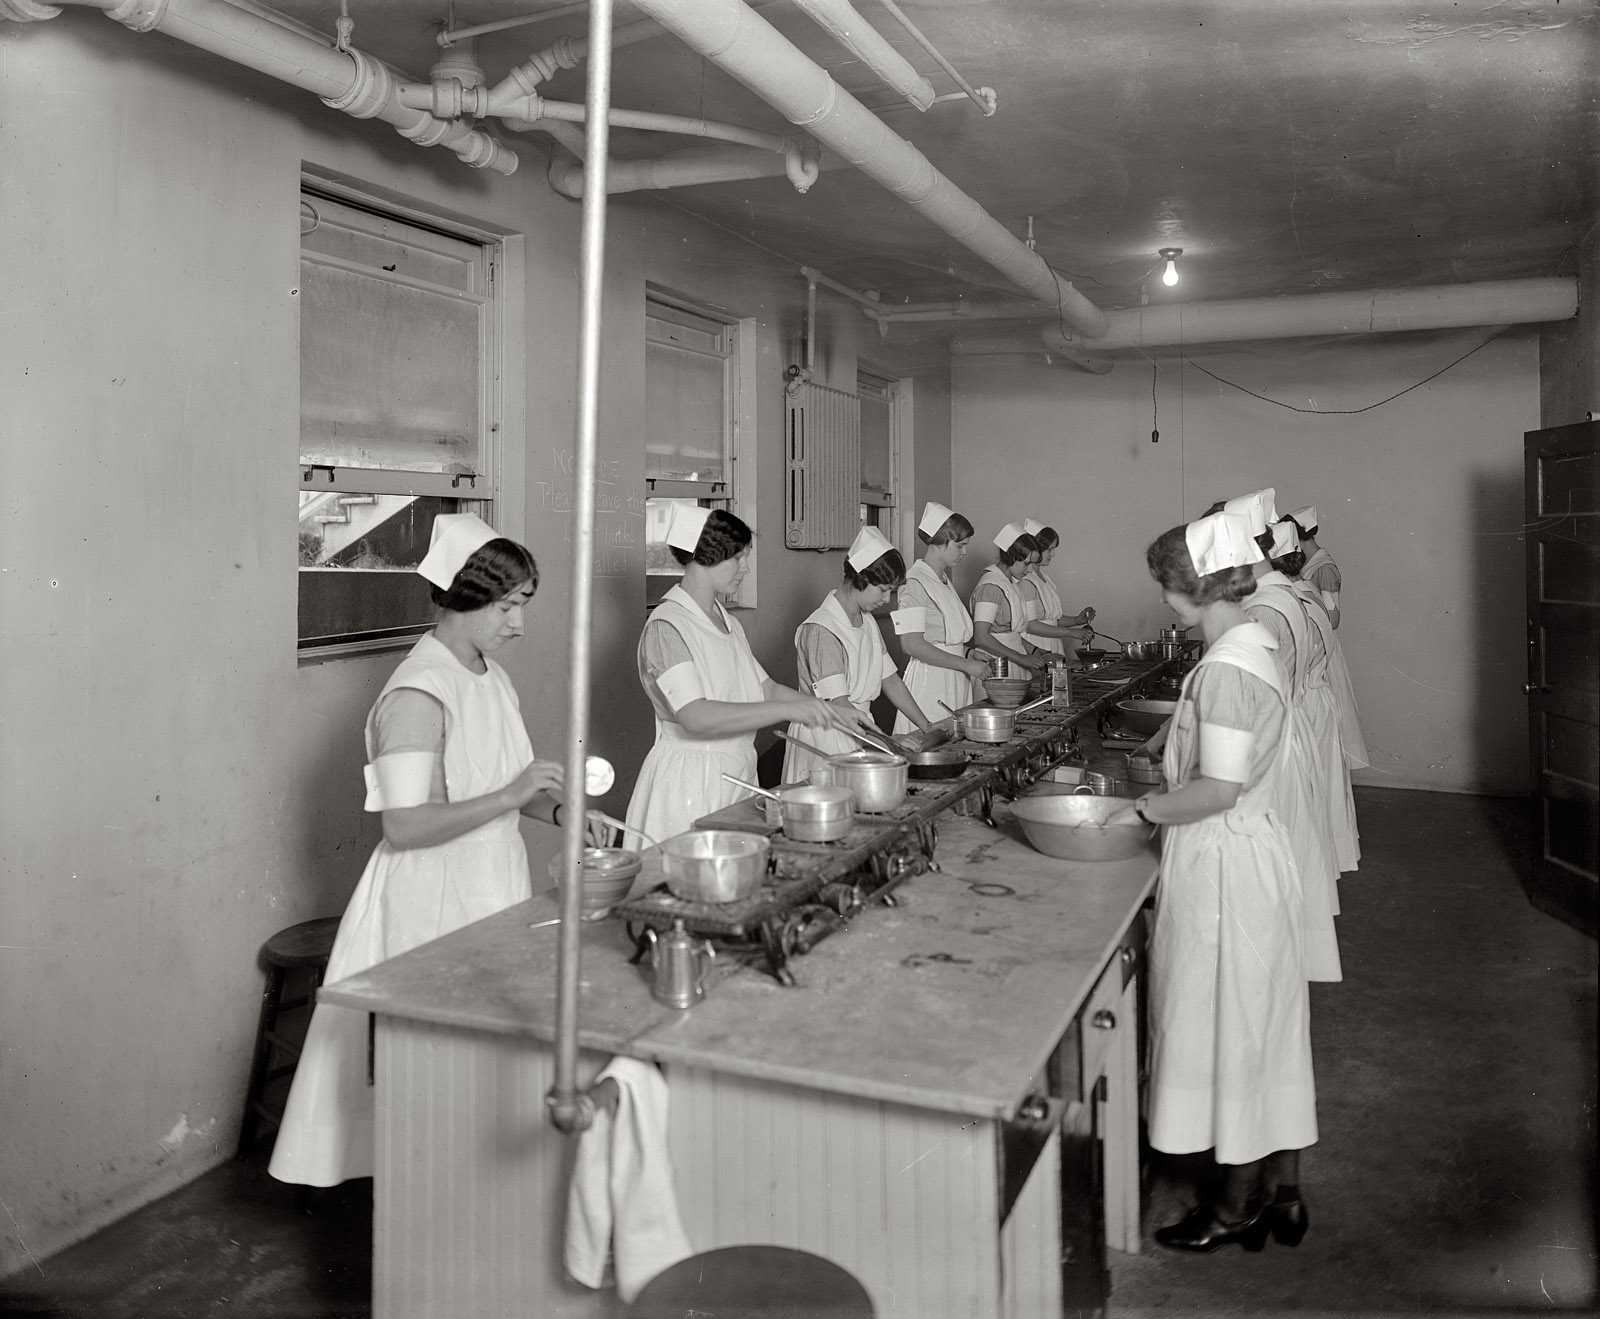 Circa 1928. "Washington Sanitarium, dietetic kitchen. Takoma Park, Maryland." Bon appetit! National Photo Company Collection glass negative. View full size.